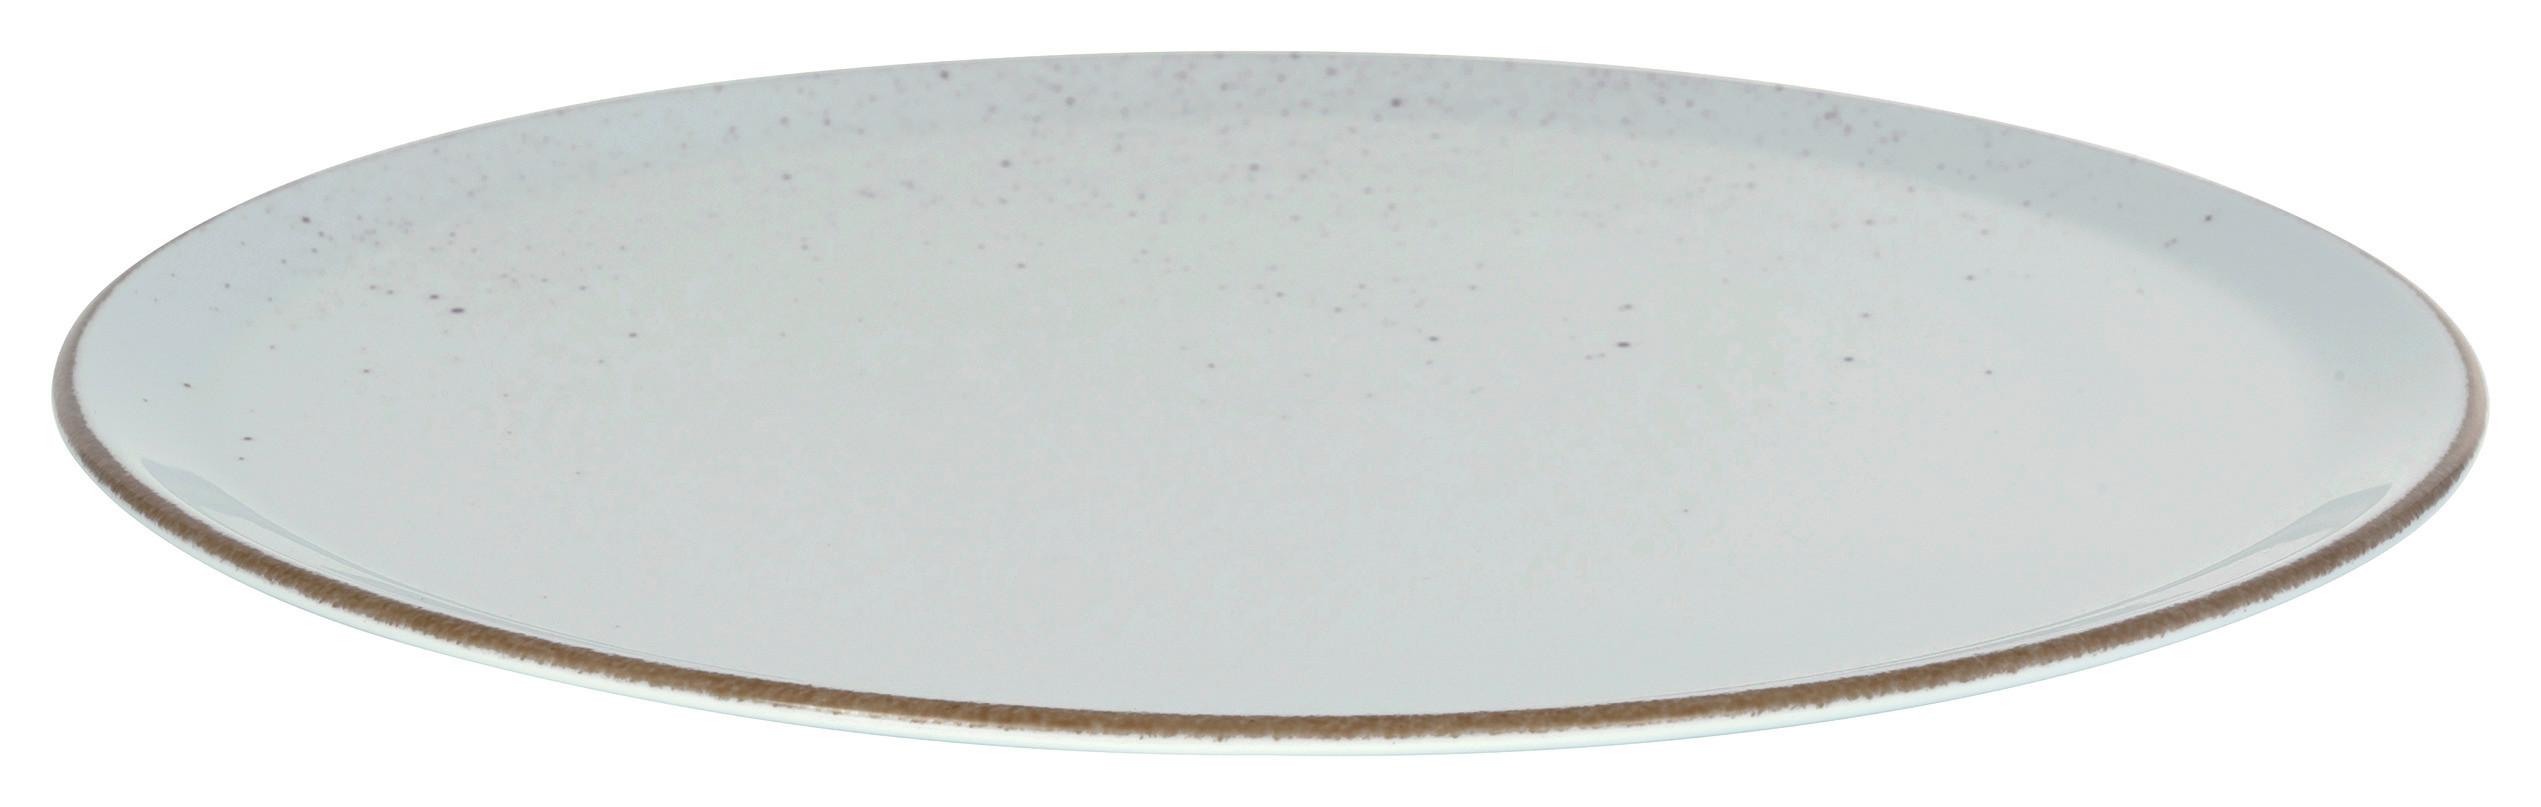 Pizzateller Capri in Weiss Ø ca. 33cm - Weiss, Modern, Keramik (33/33/2cm) - Premium Living